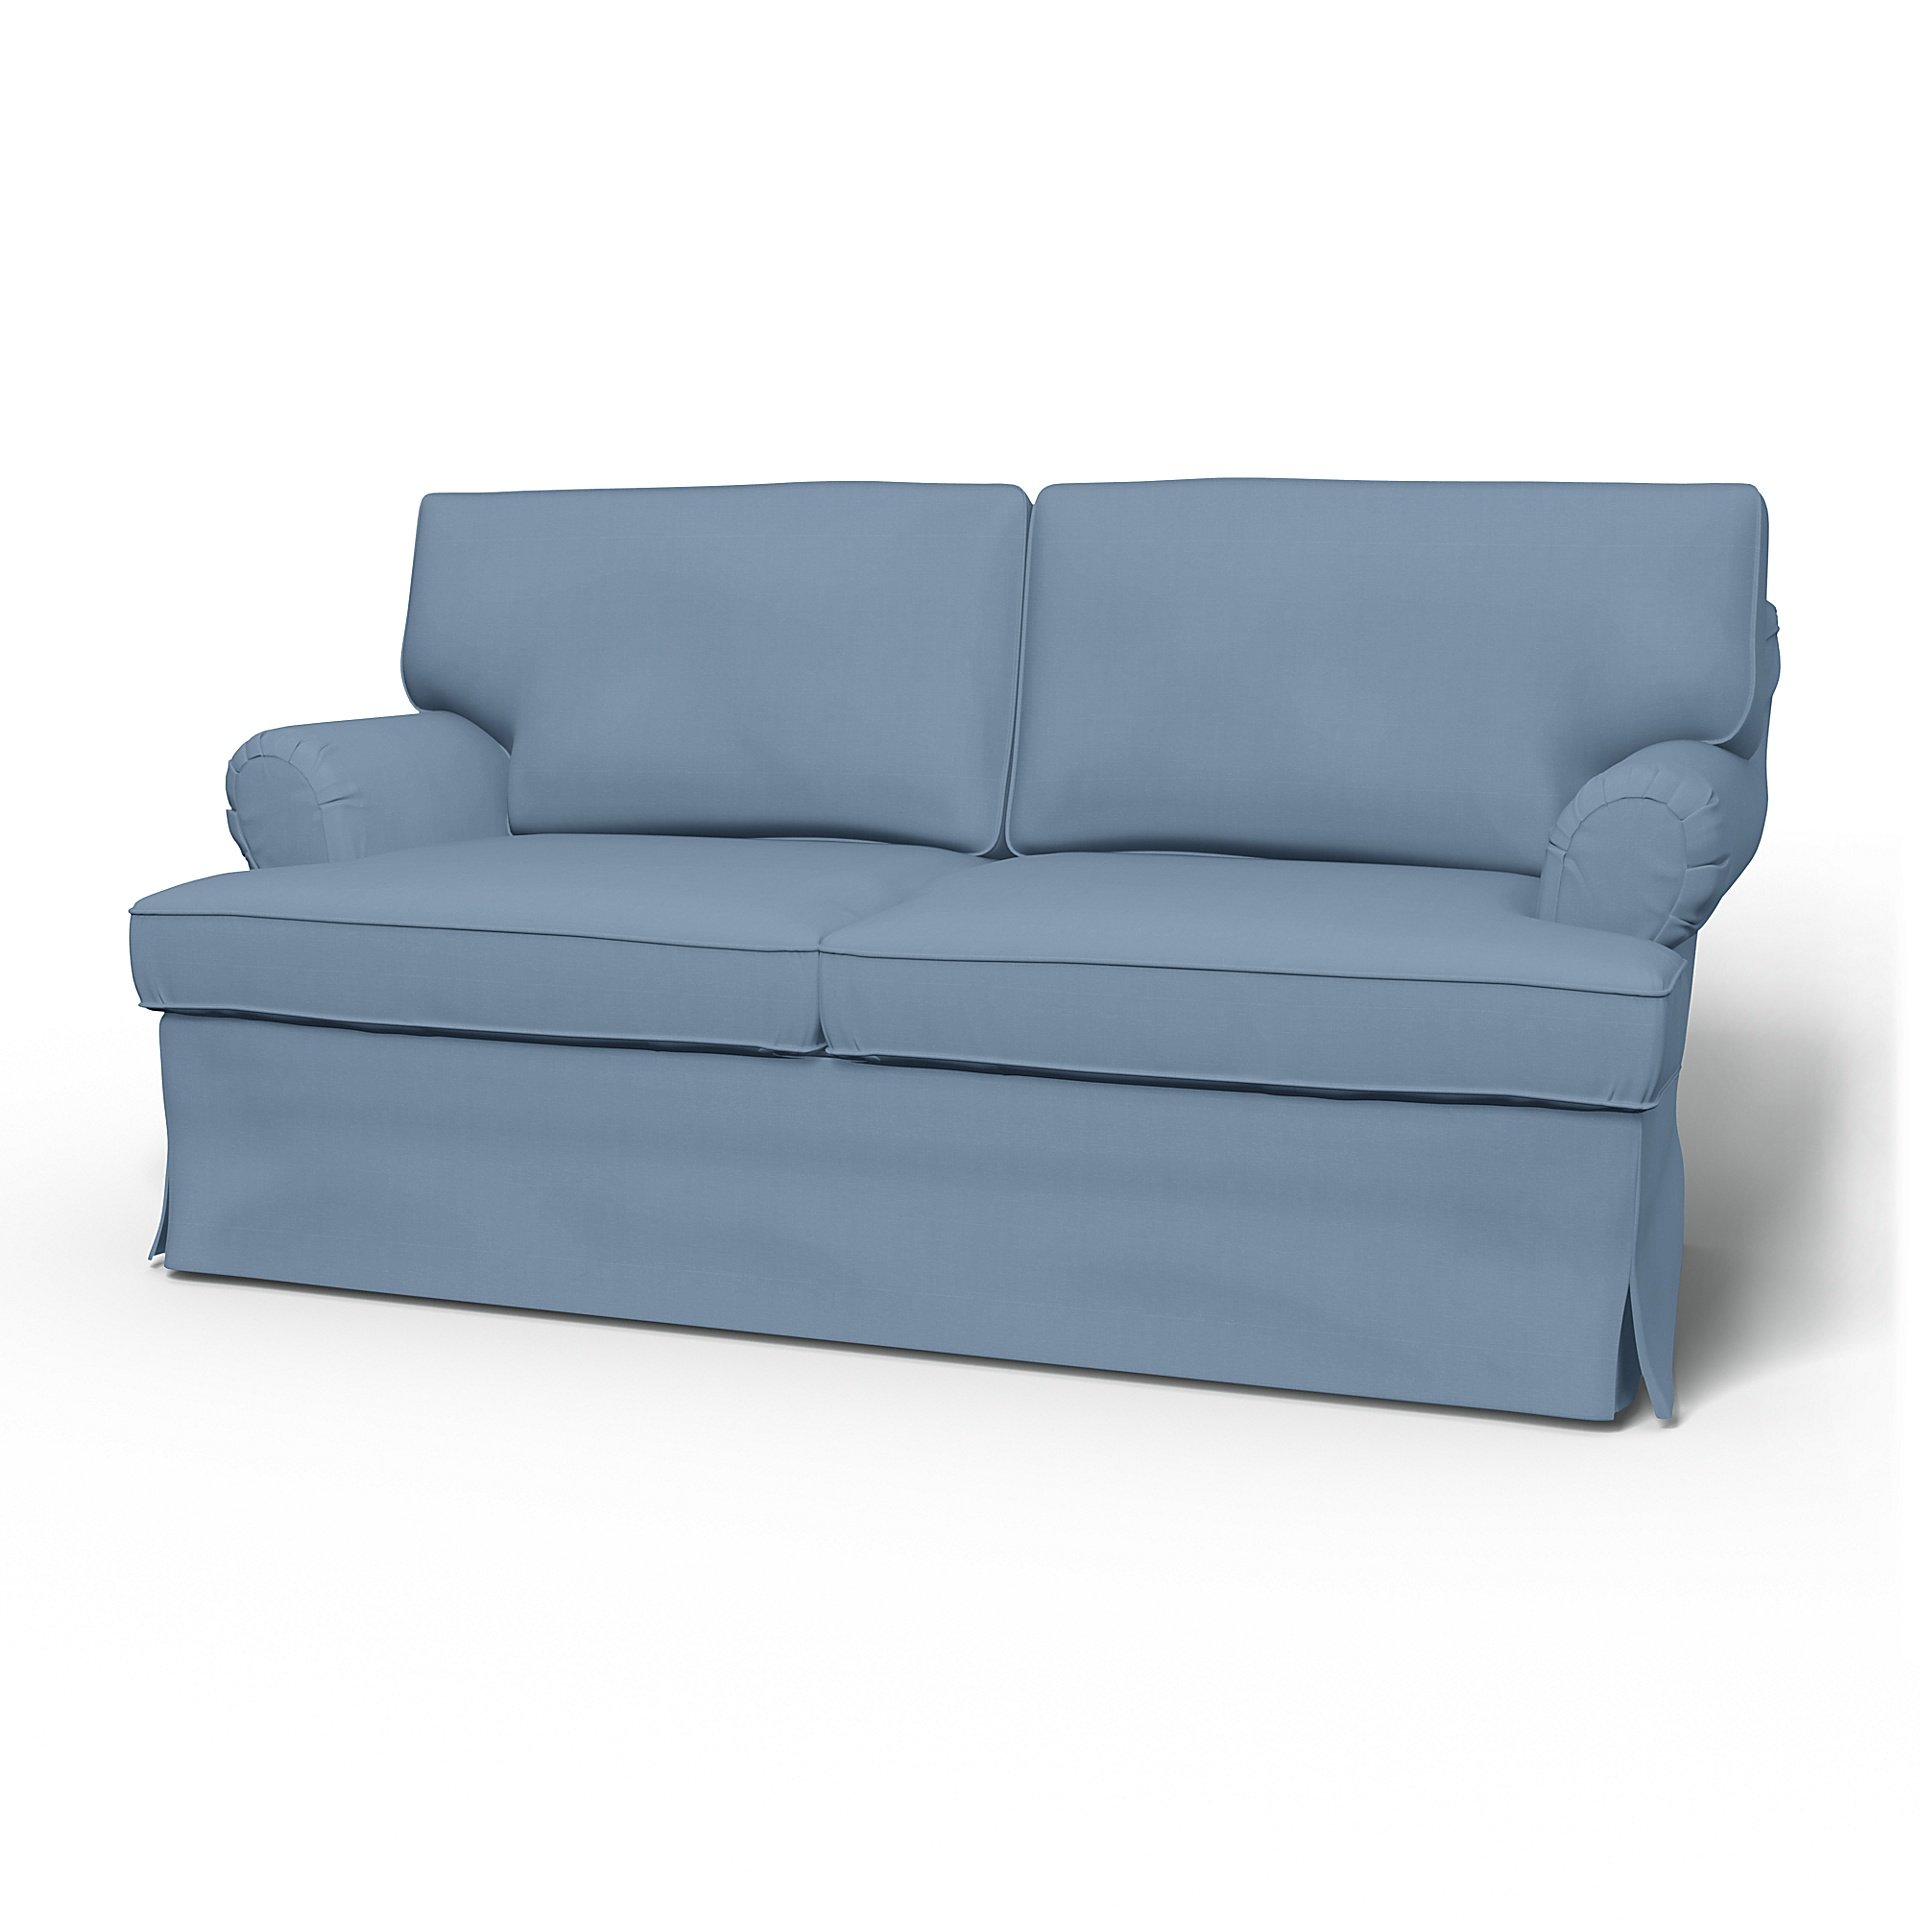 IKEA - Stockholm 2 Seater Sofa Cover (1994-2000), Dusty Blue, Cotton - Bemz